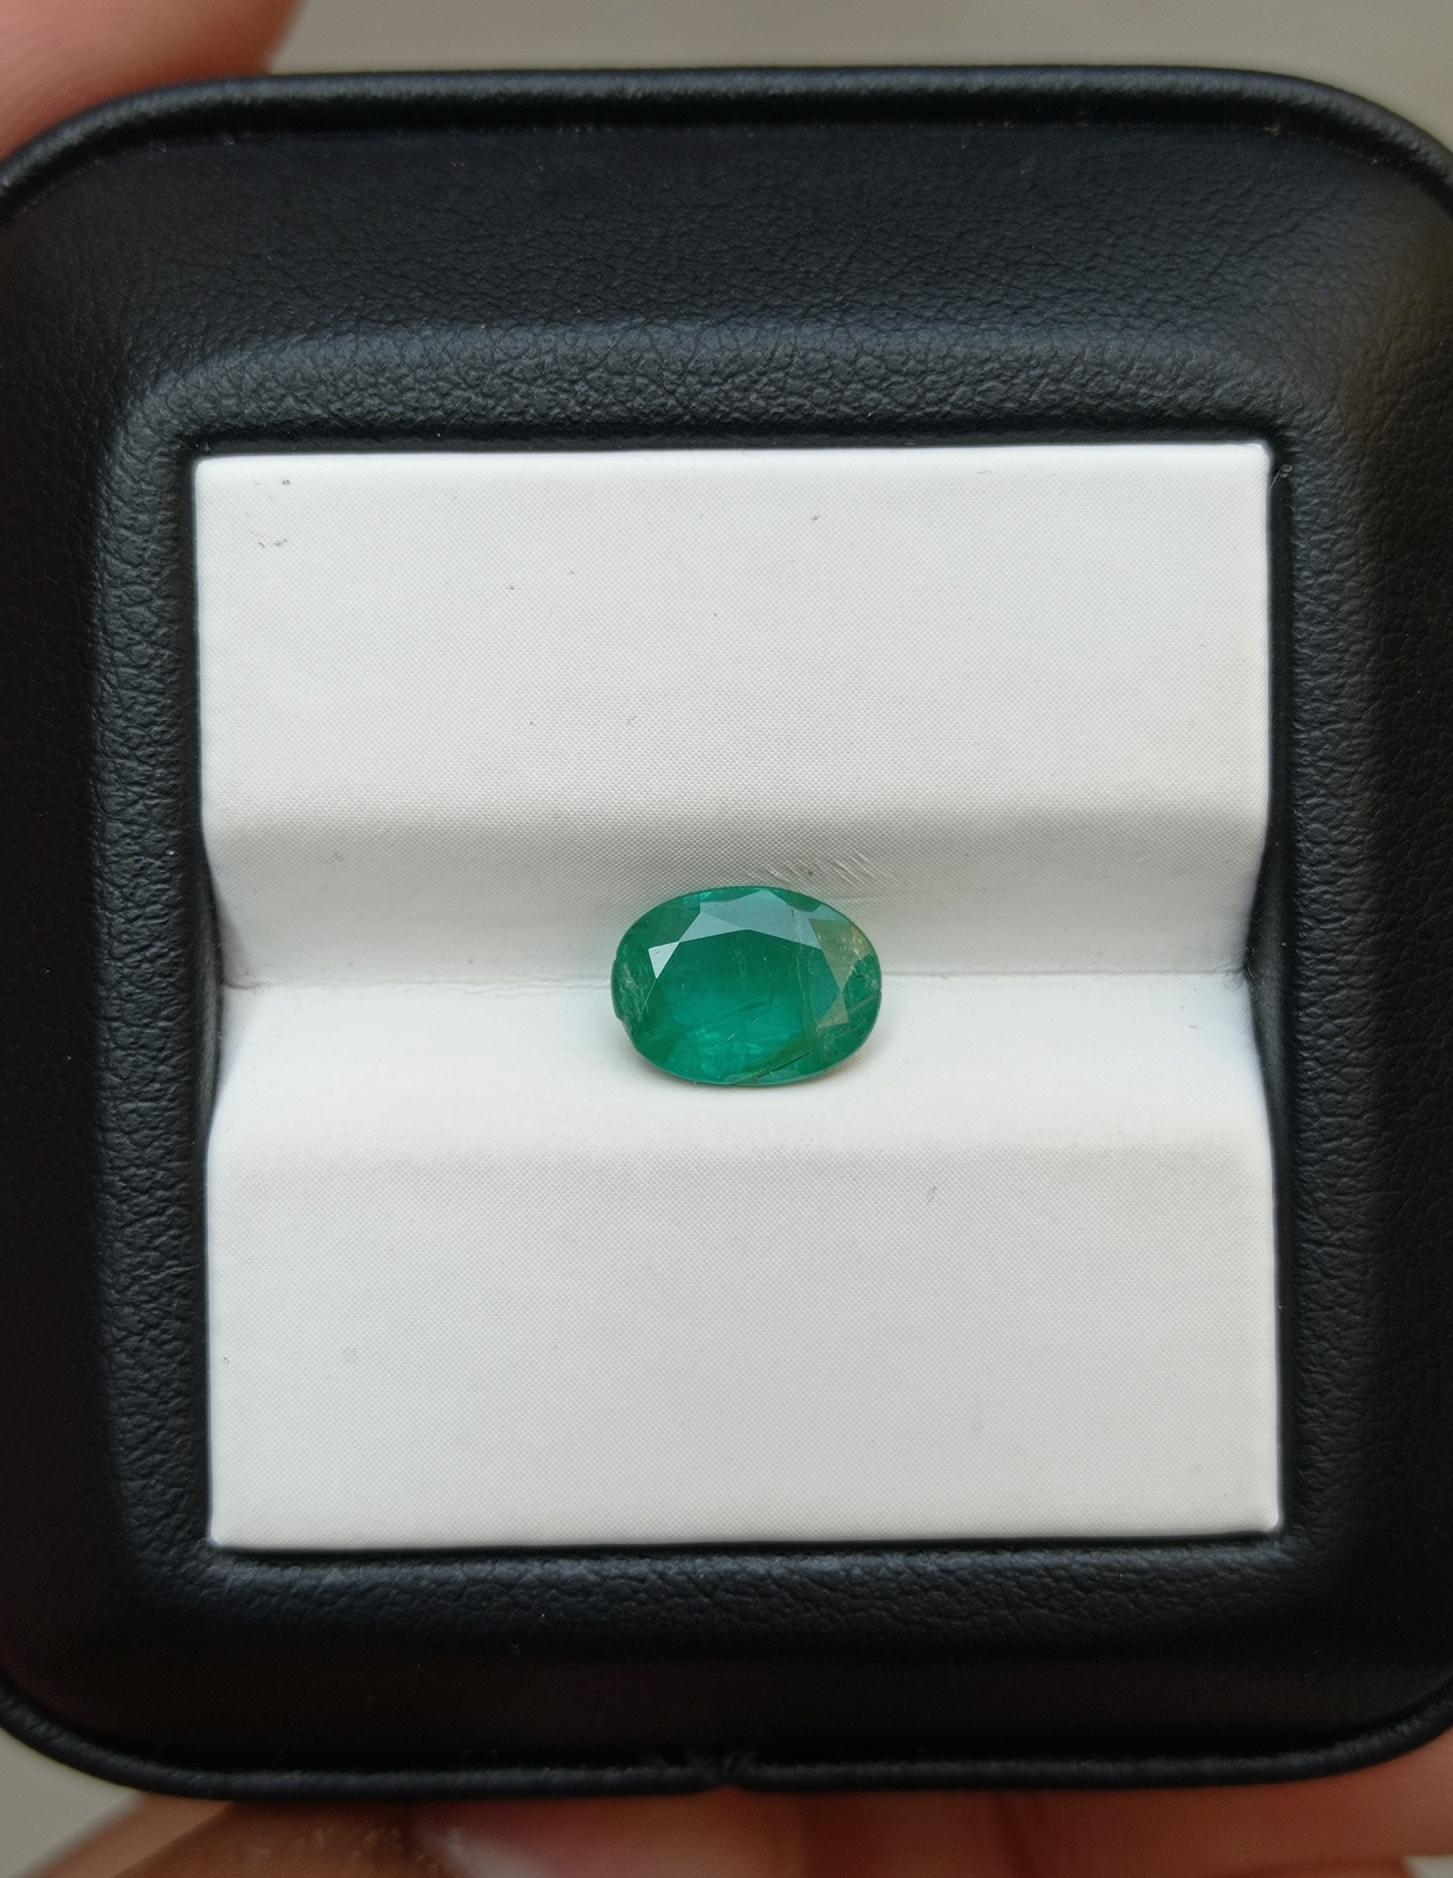 1.20ct Emerald for sale - Budh Ratna - Zamurd - Pachu Stone, Markat Mani Stone - 9x6.4x3.5mm